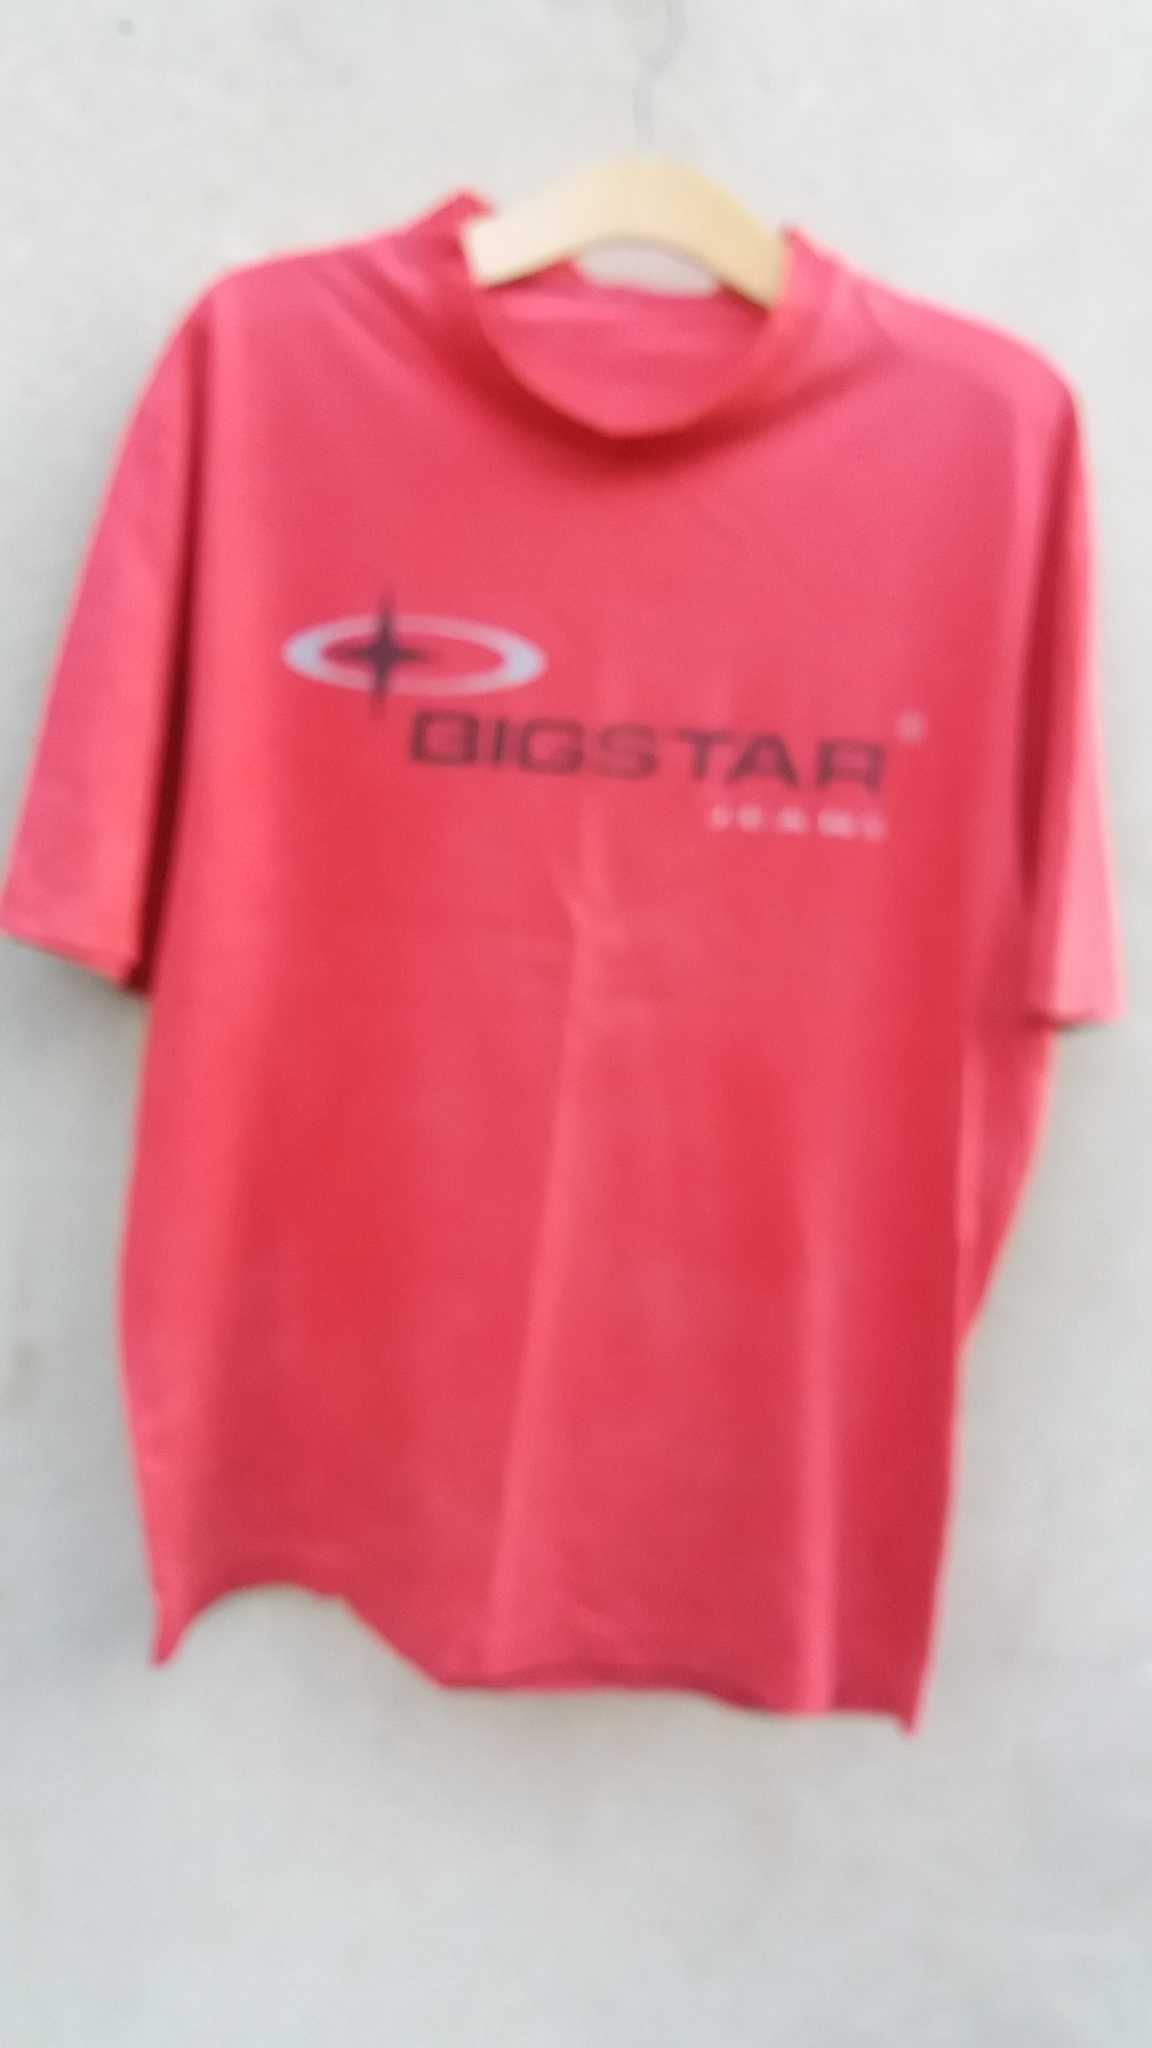 T-shirt big star